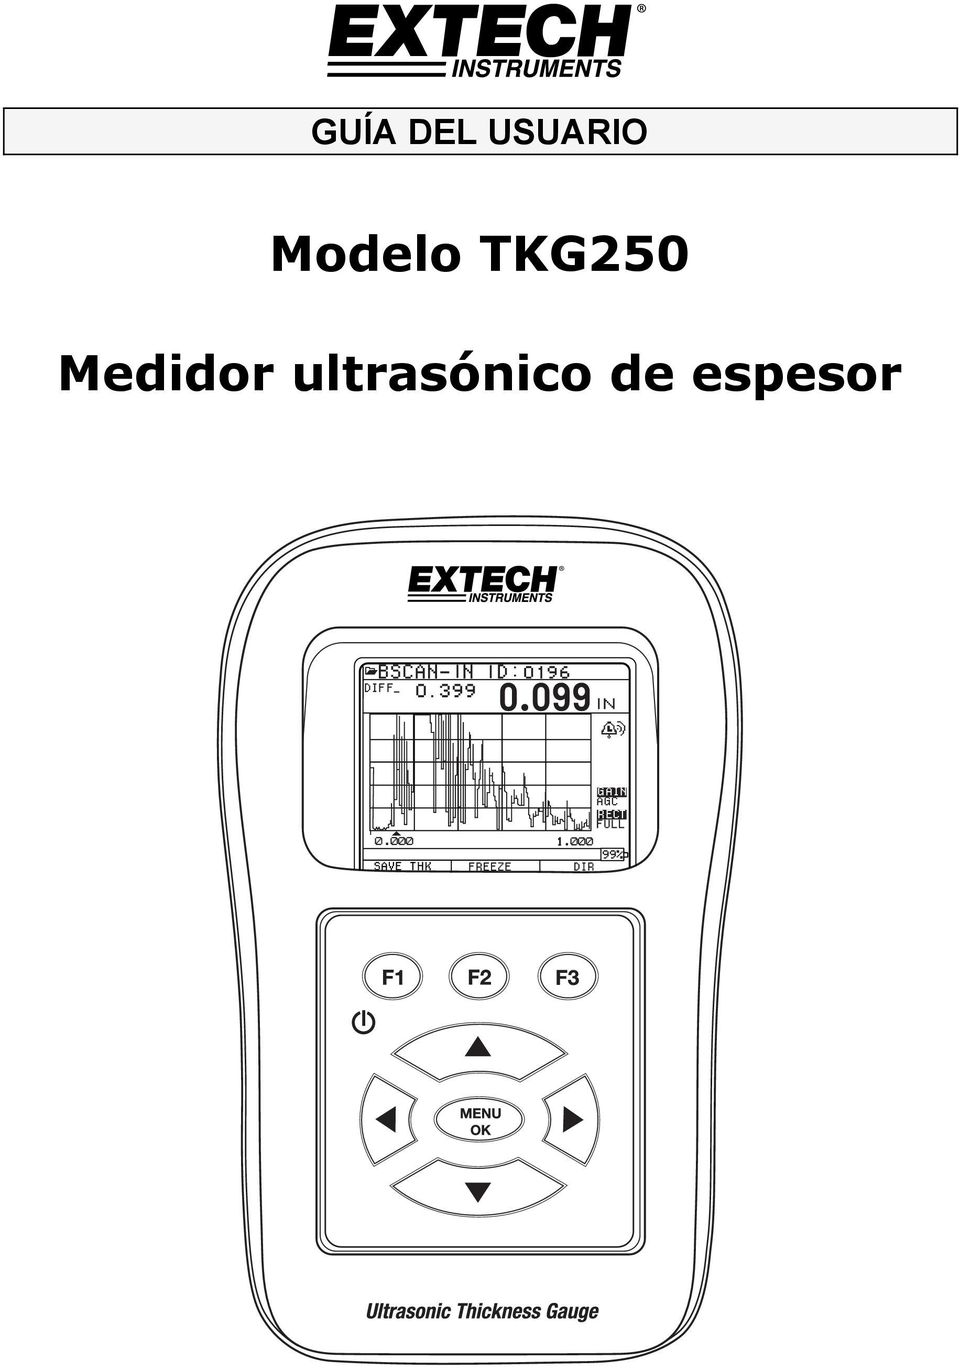 TKG250 Medidor